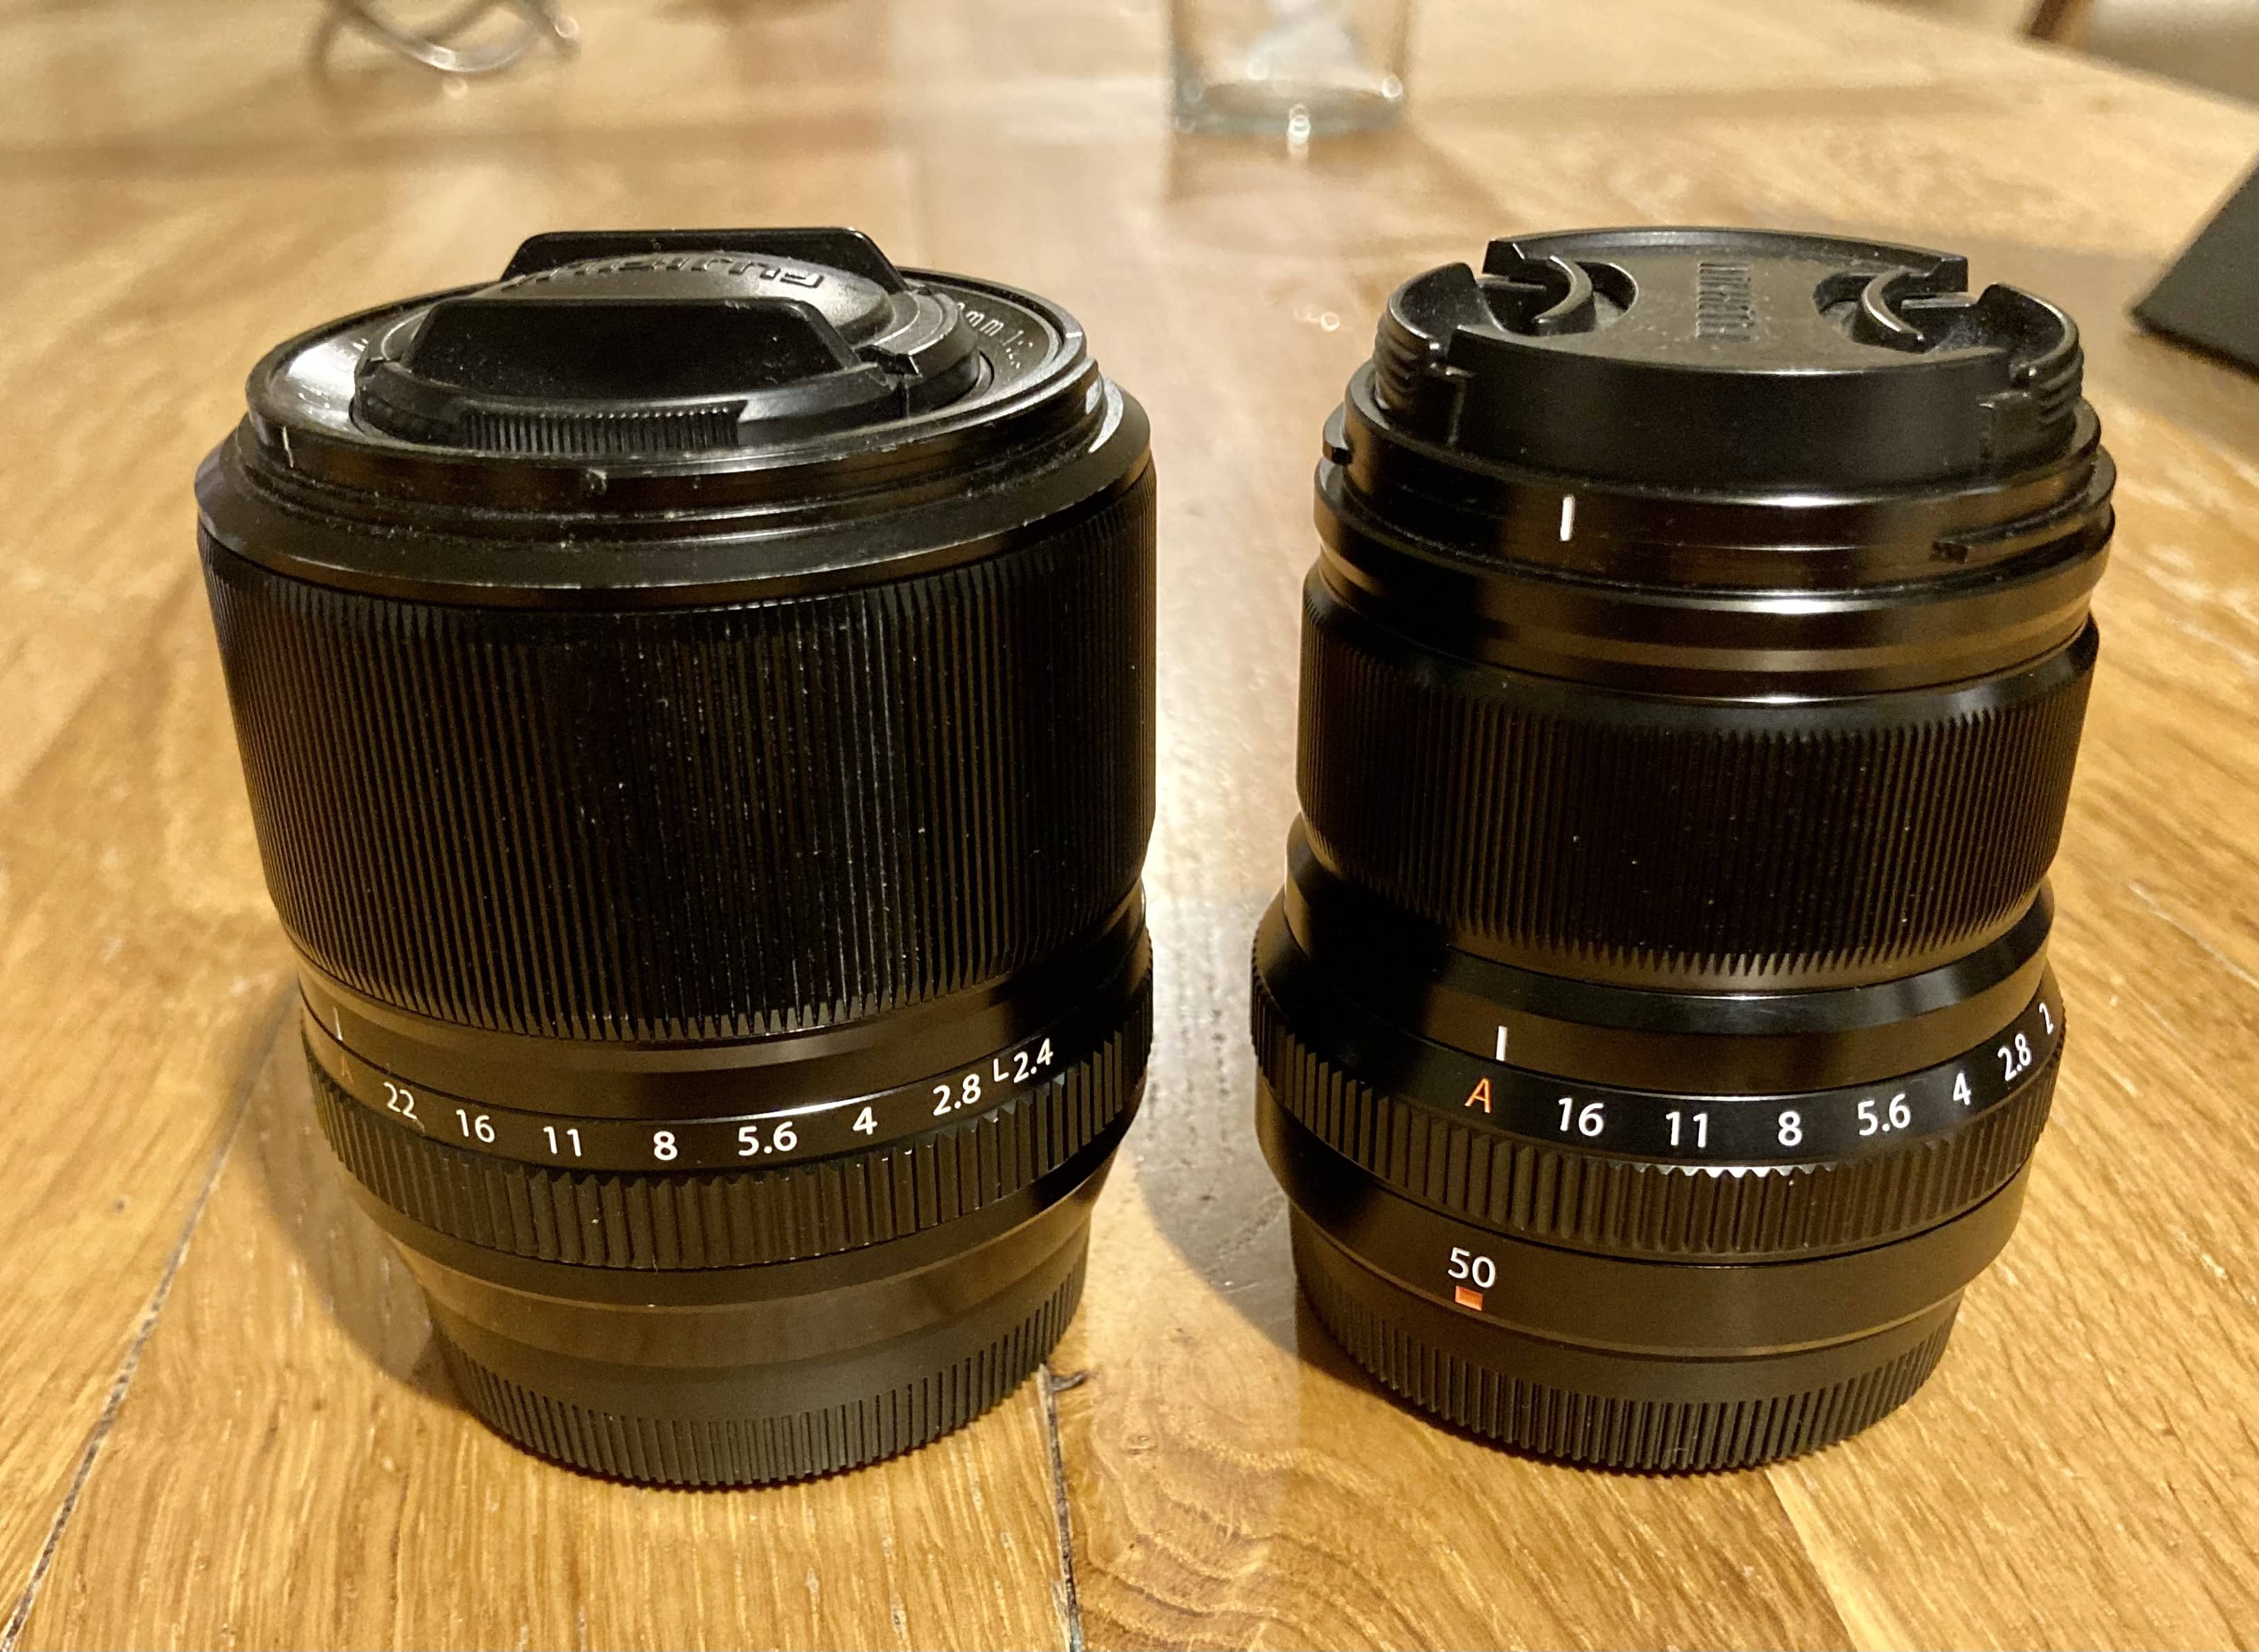 Two fuji lenses